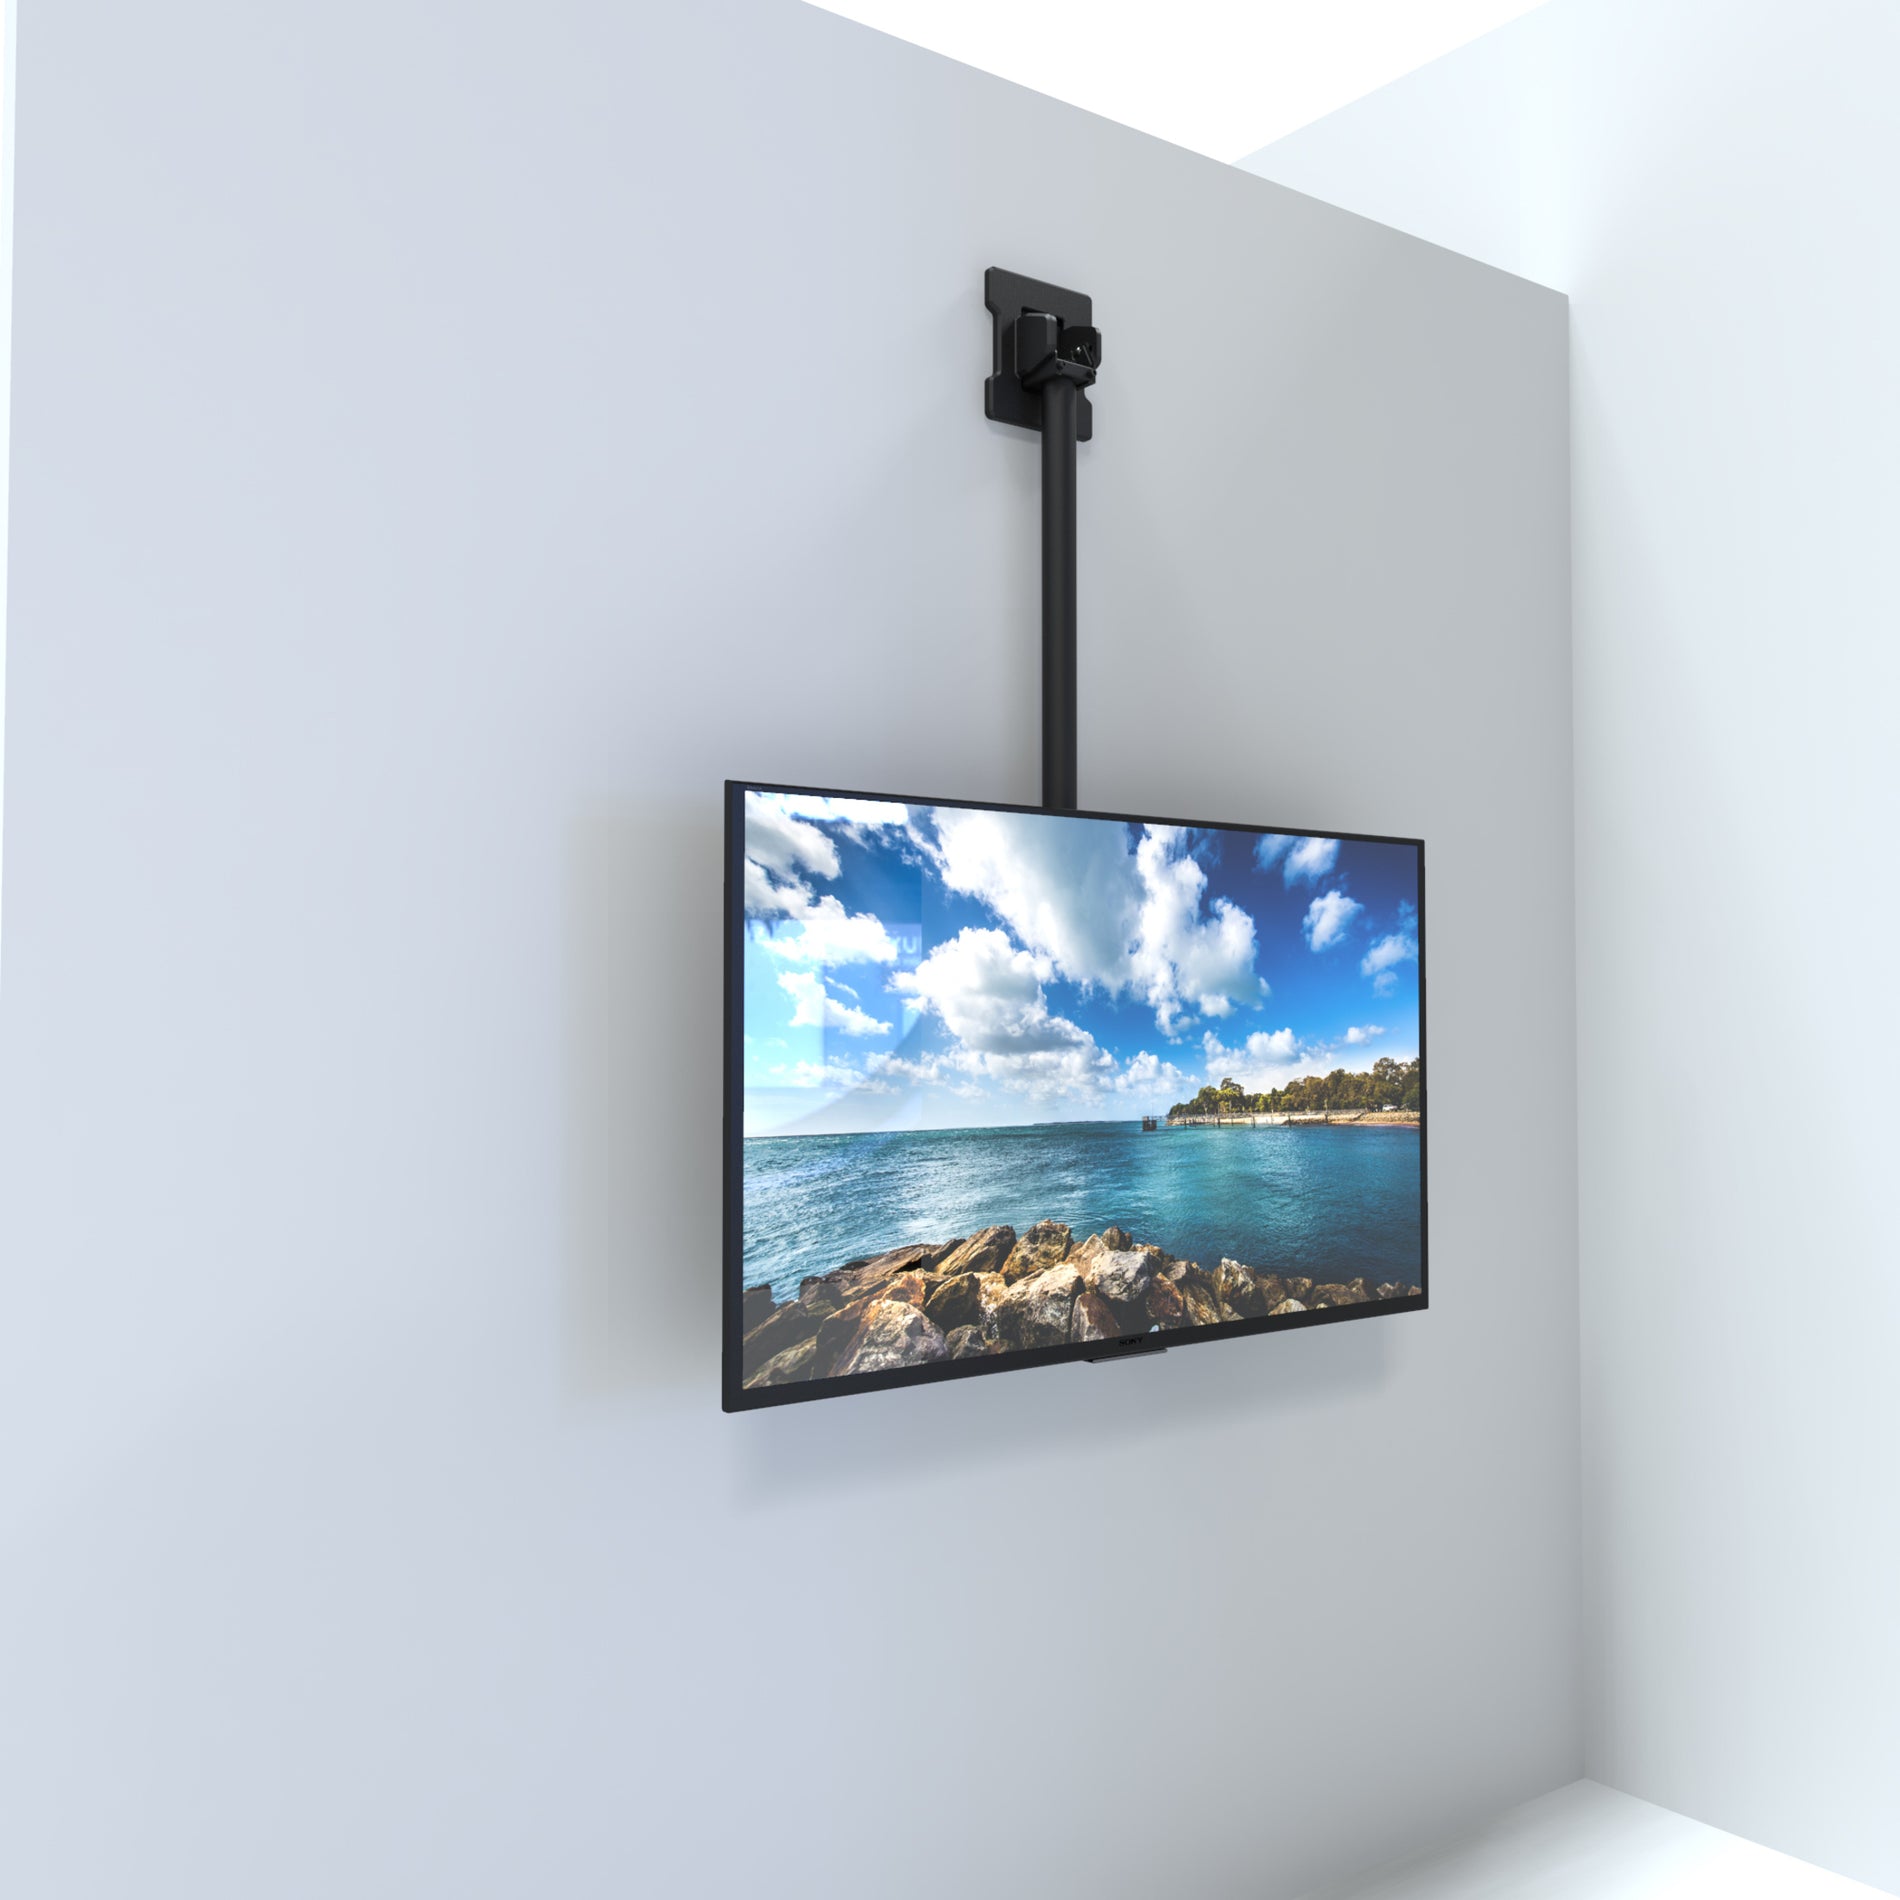 Kanto CM600 Ceiling Mount for Flat Panel Display, Adjustable, Cable Management, Tilt, Swivel, 360° Rotation